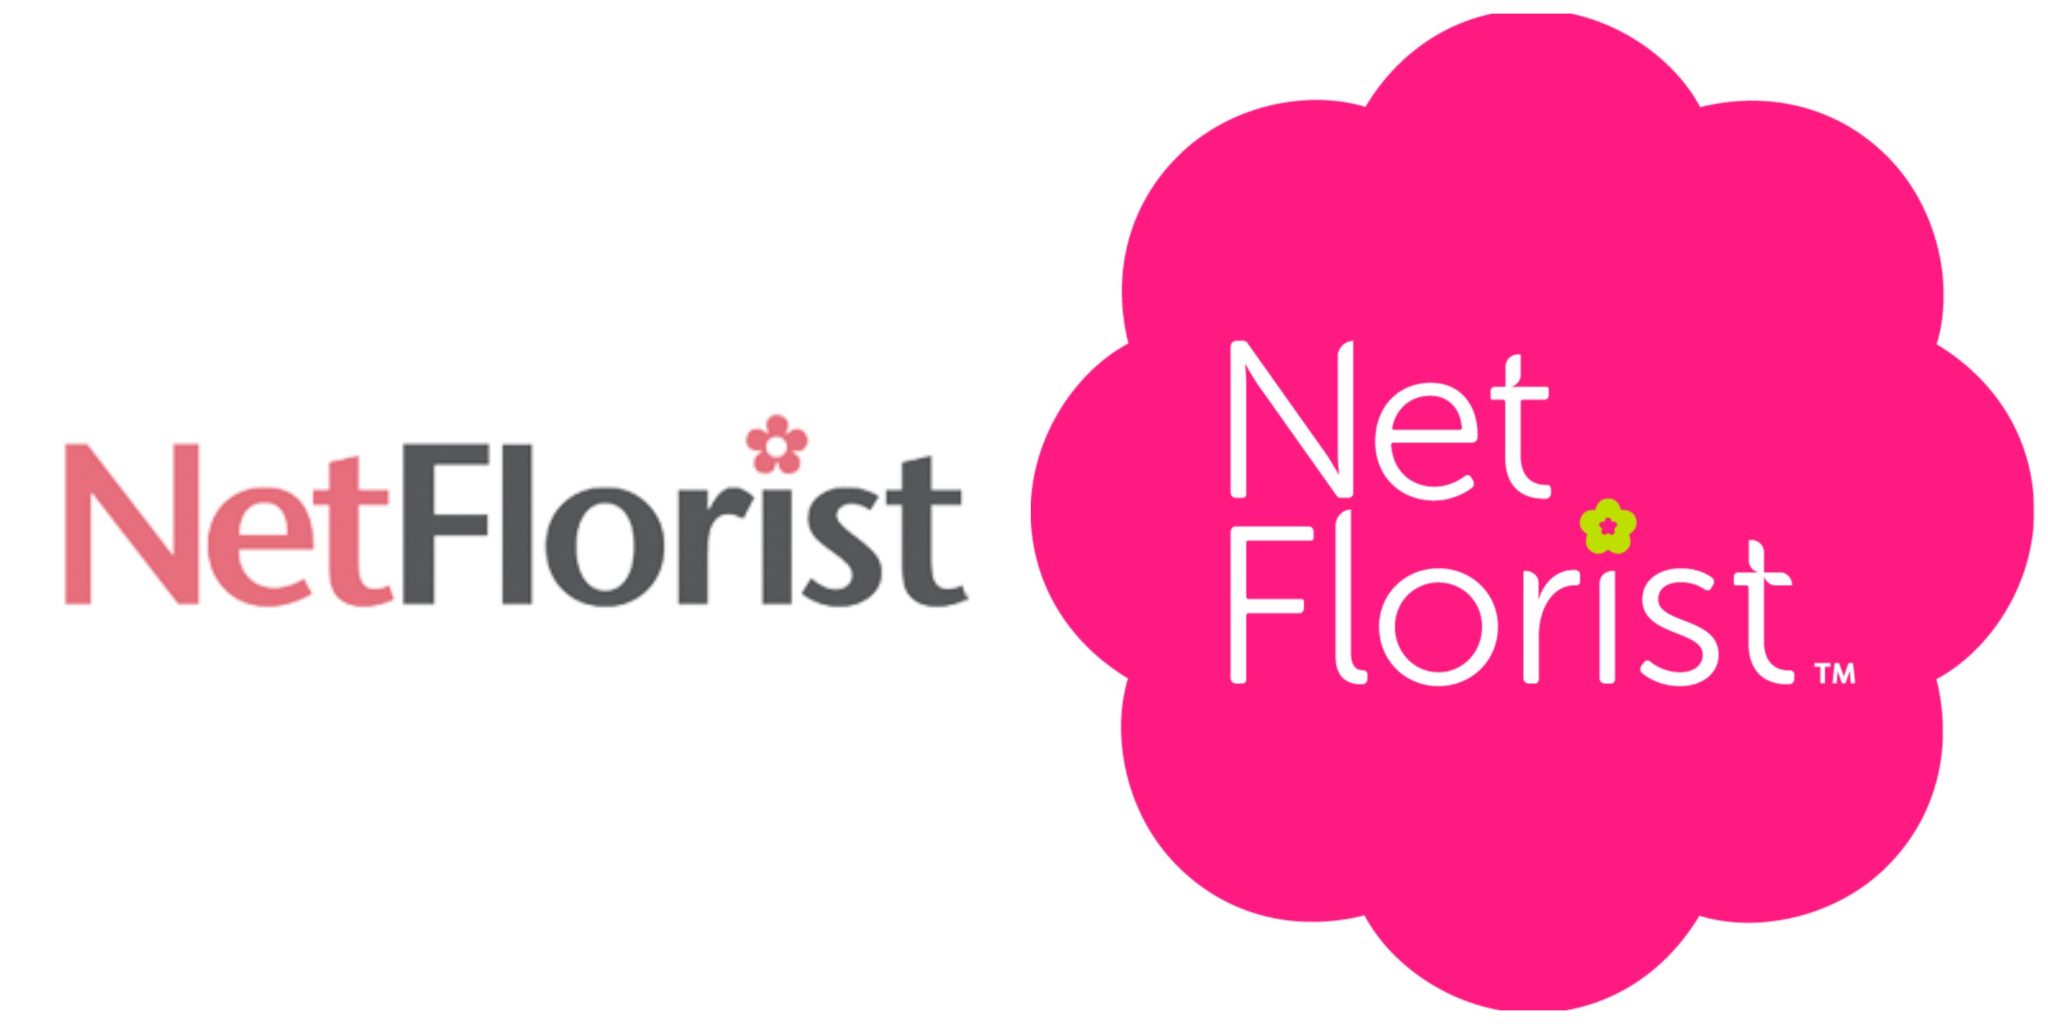 NetFlorist – Contact Details